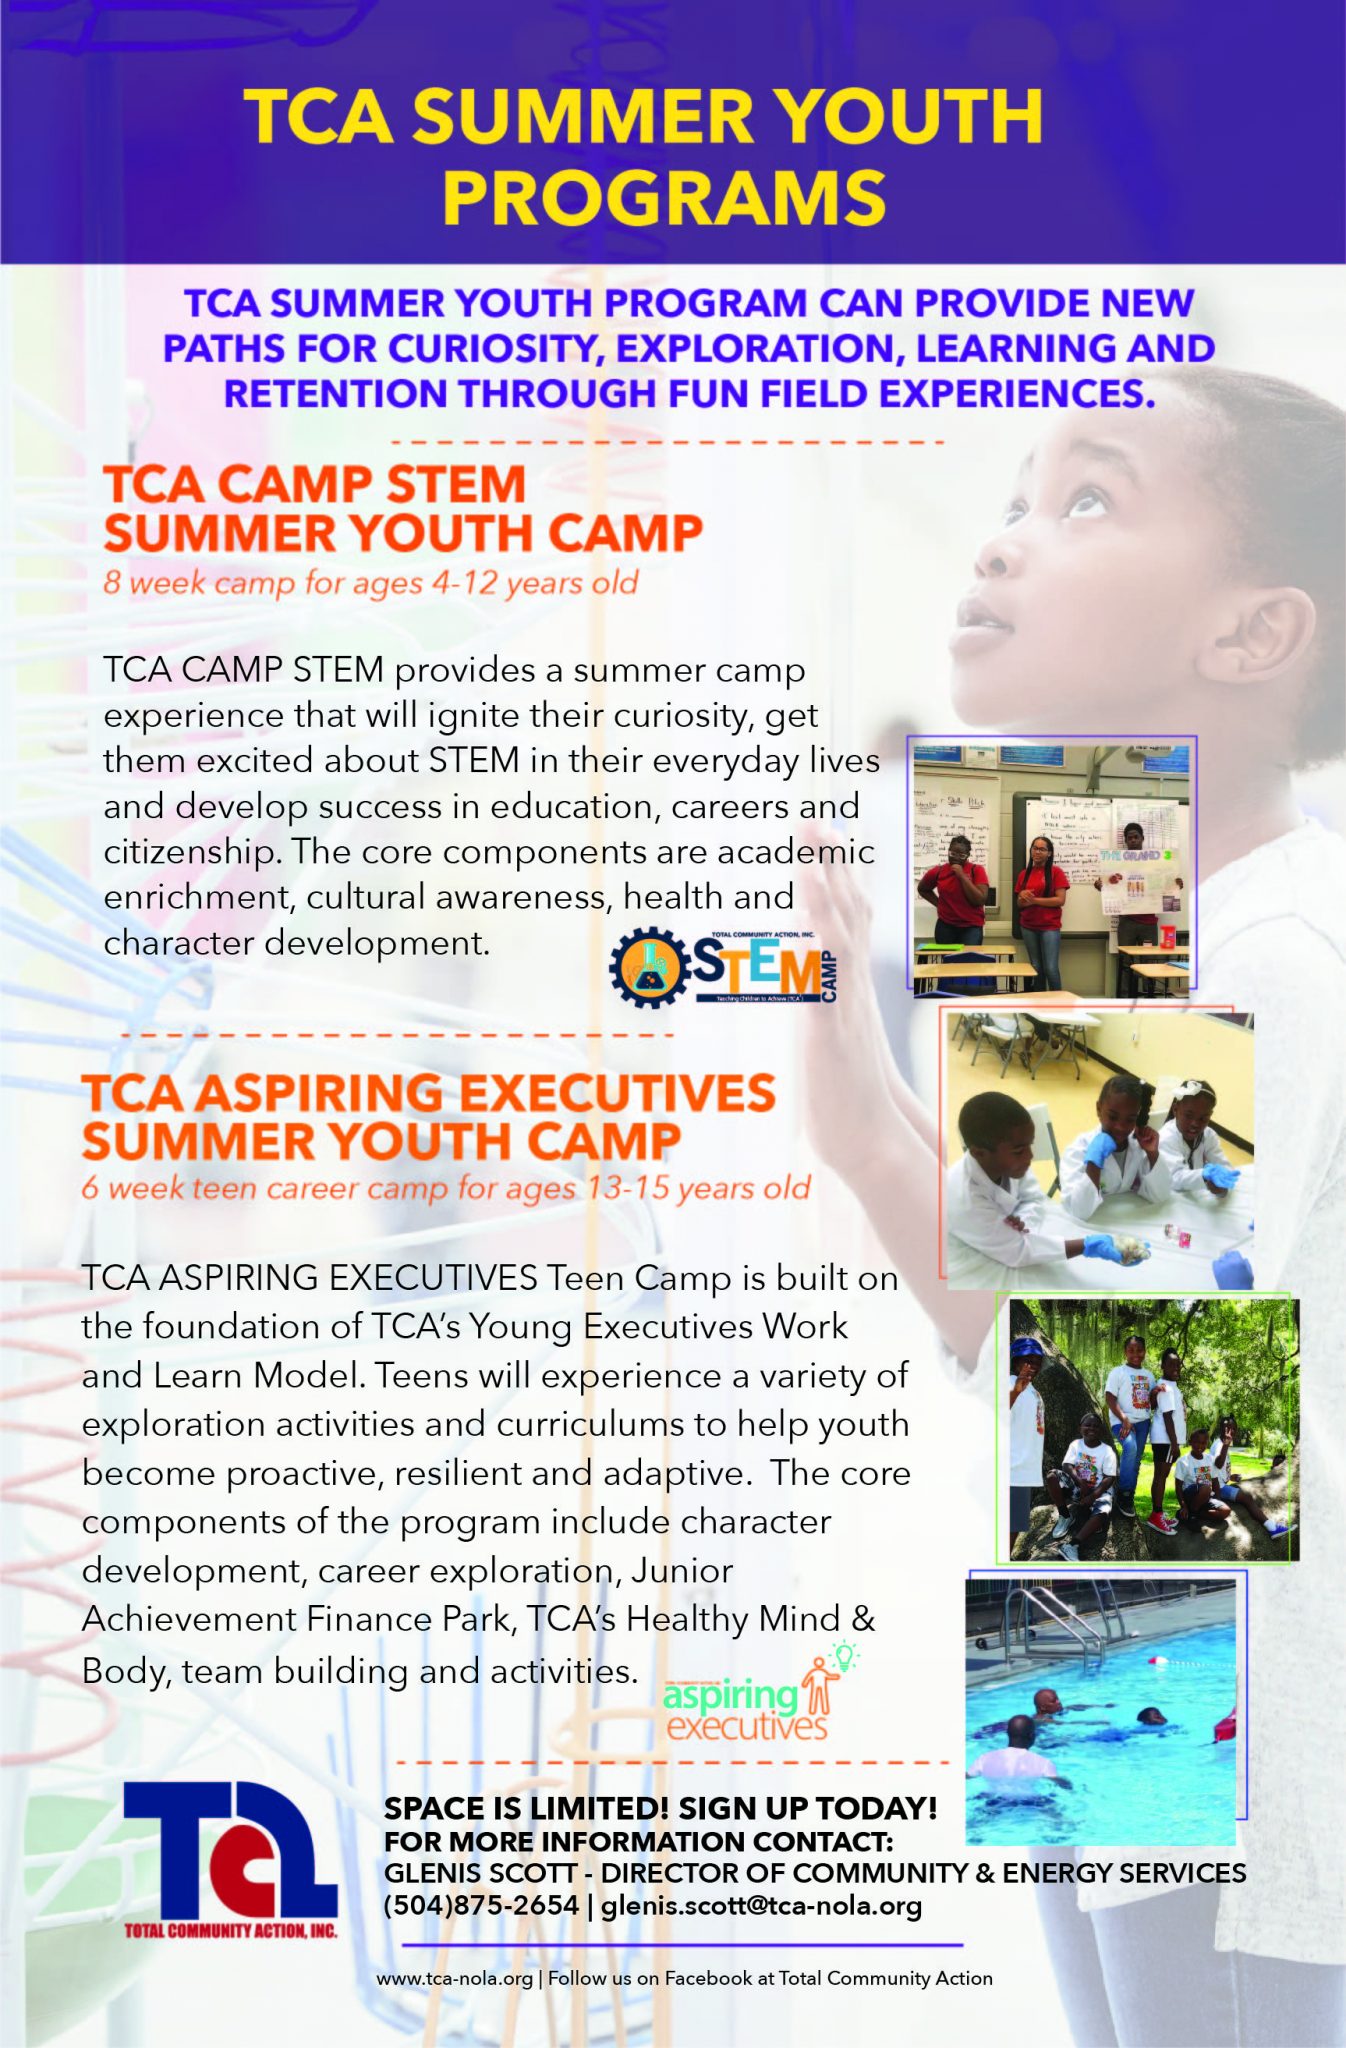 TCA STEM CAMP Total Community Action